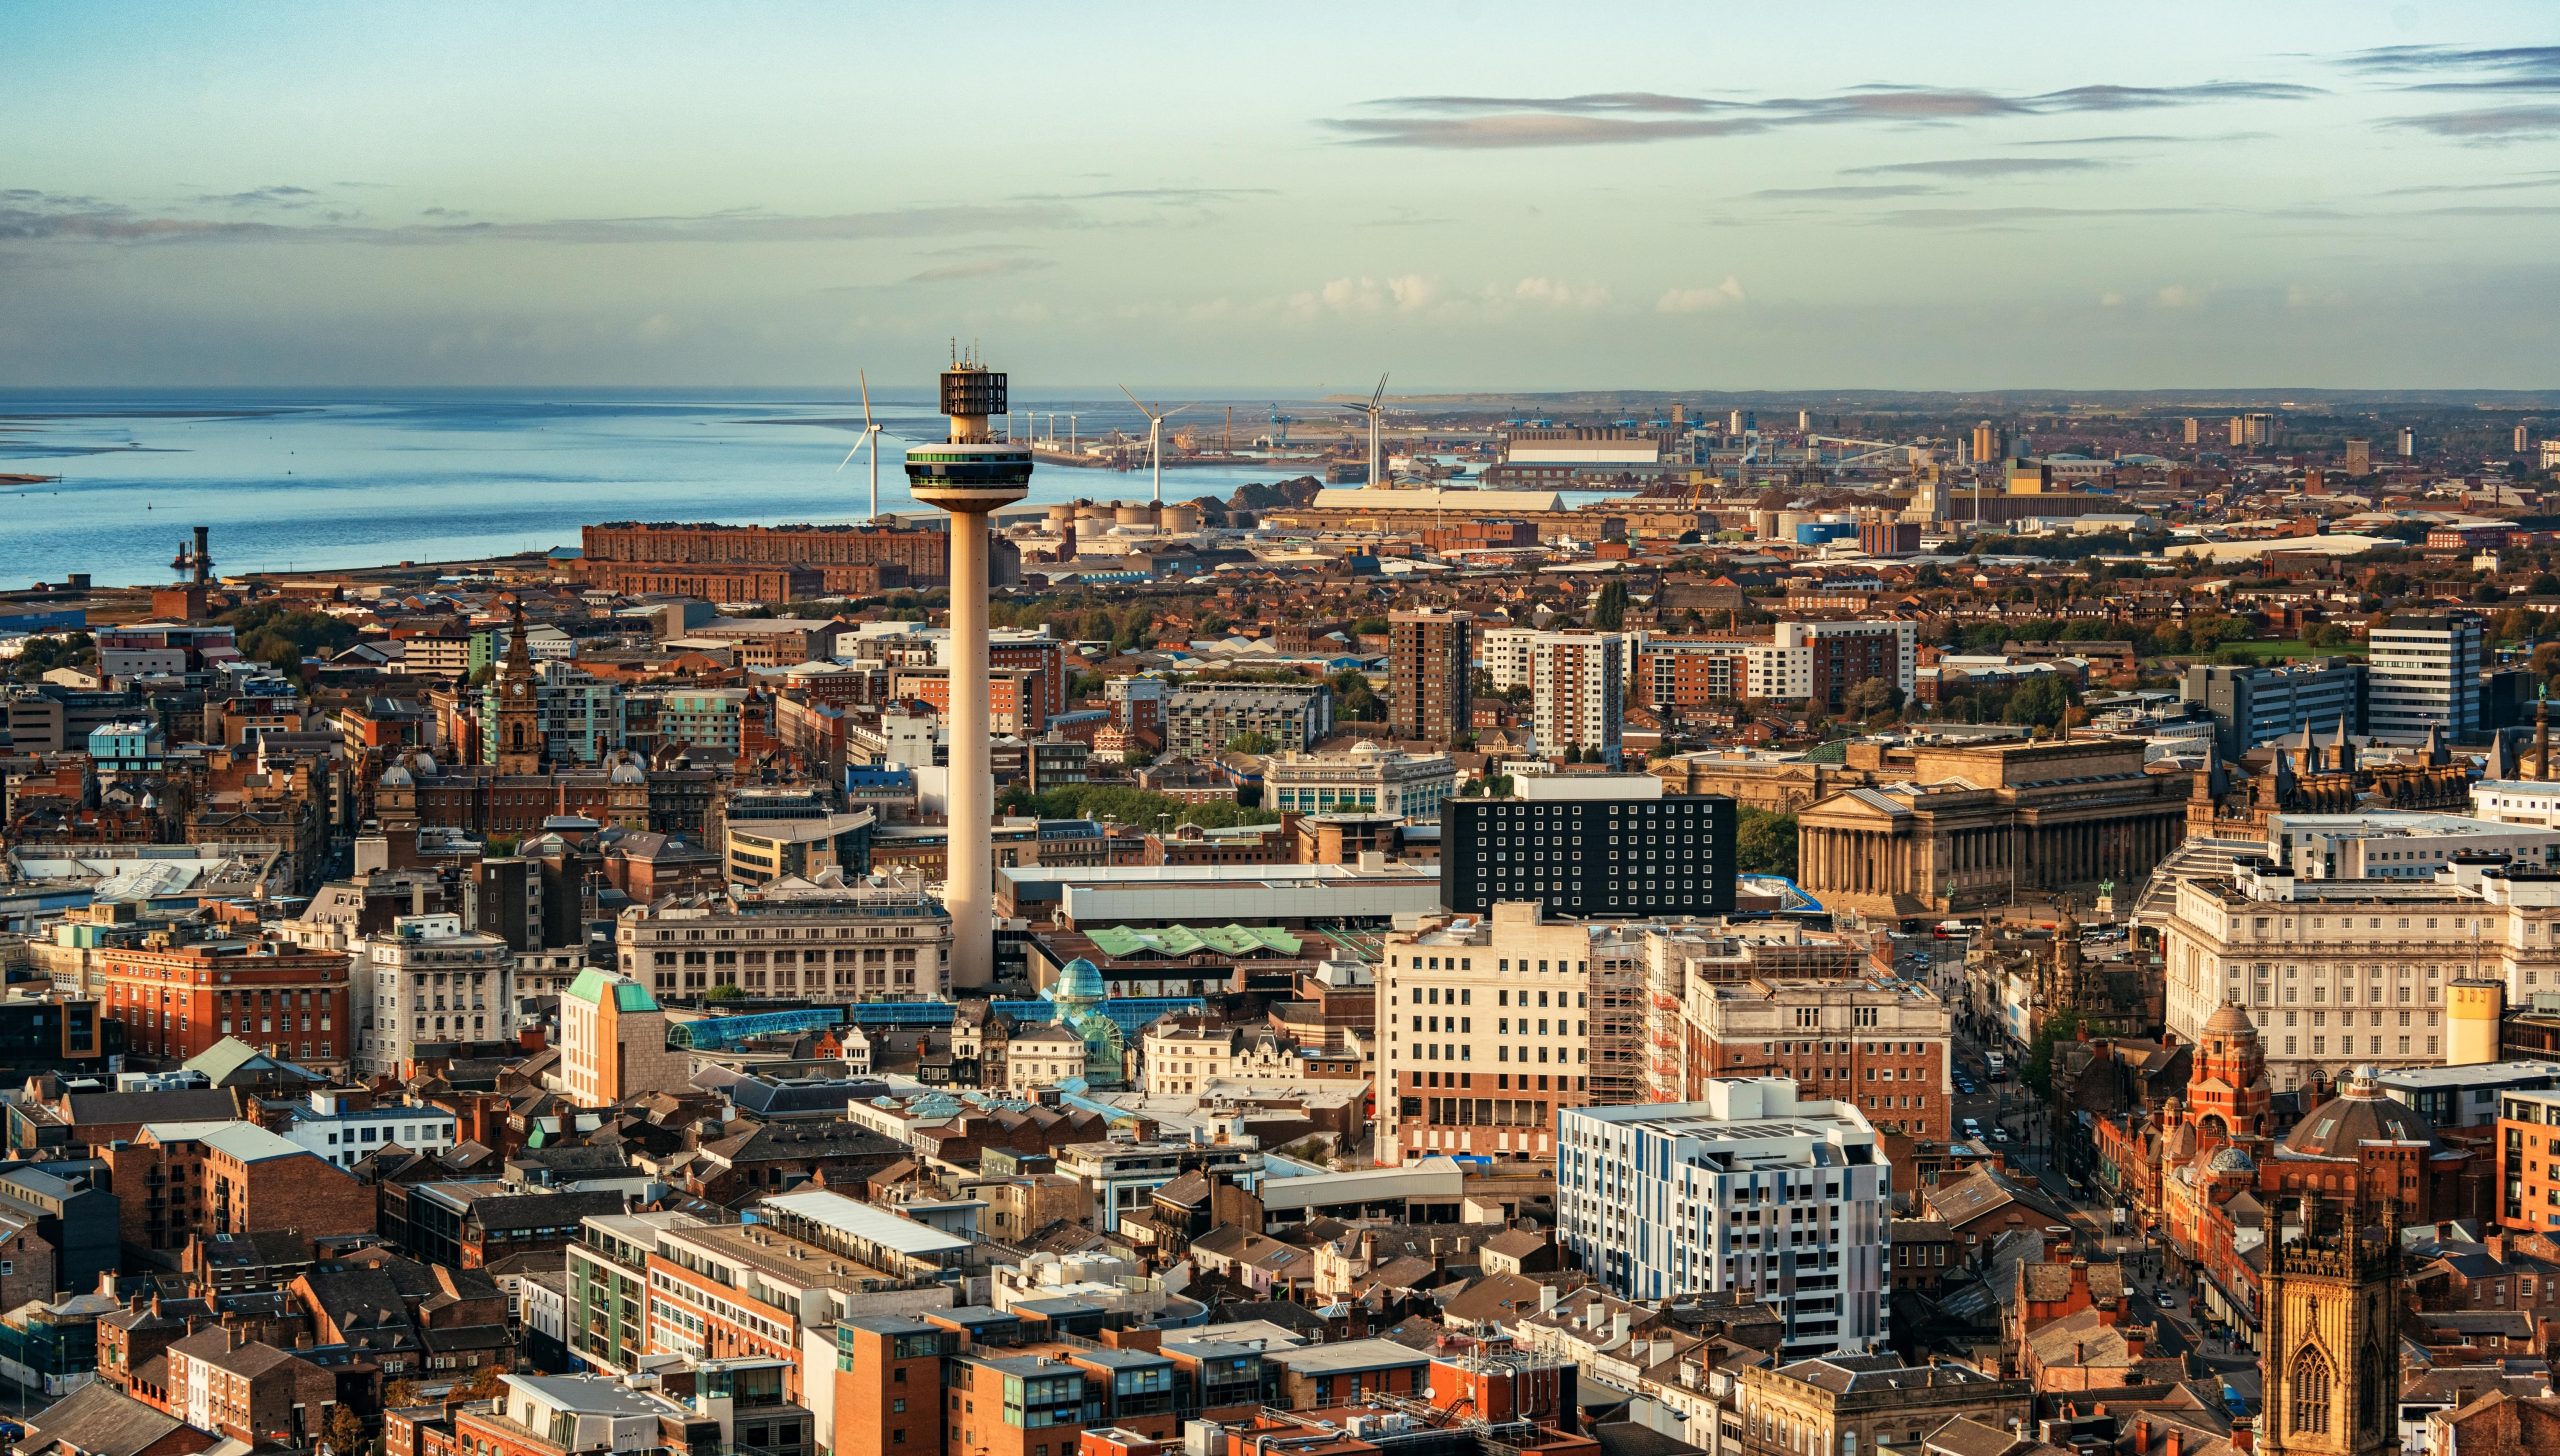 The Social Housing Scheme Focusing on Liverpool Regeneration